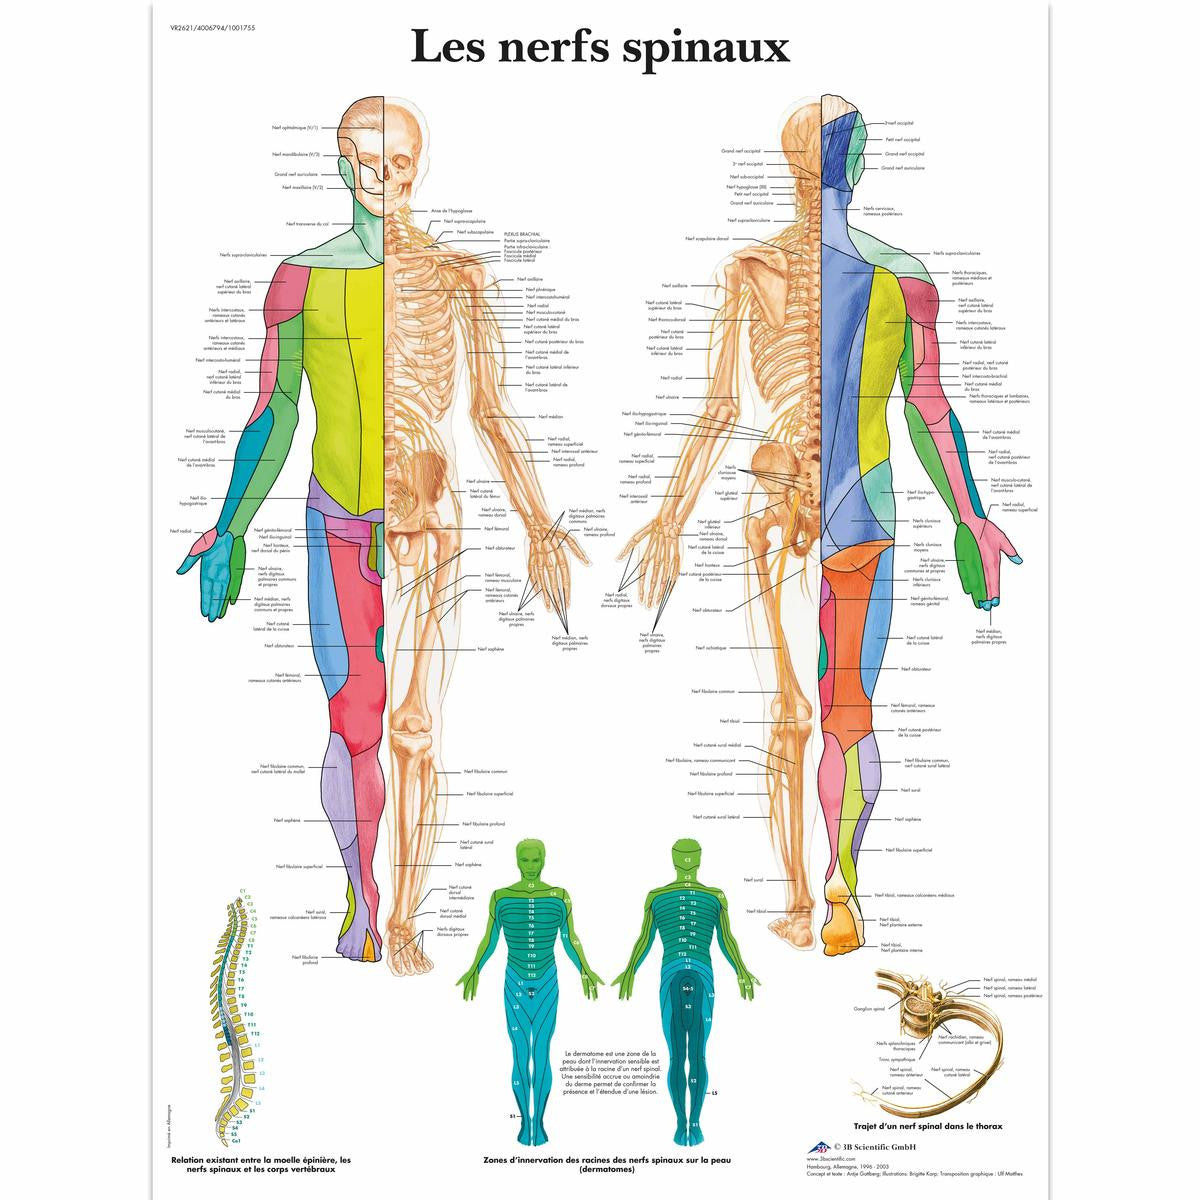 Les Nerfs Spinaux chart